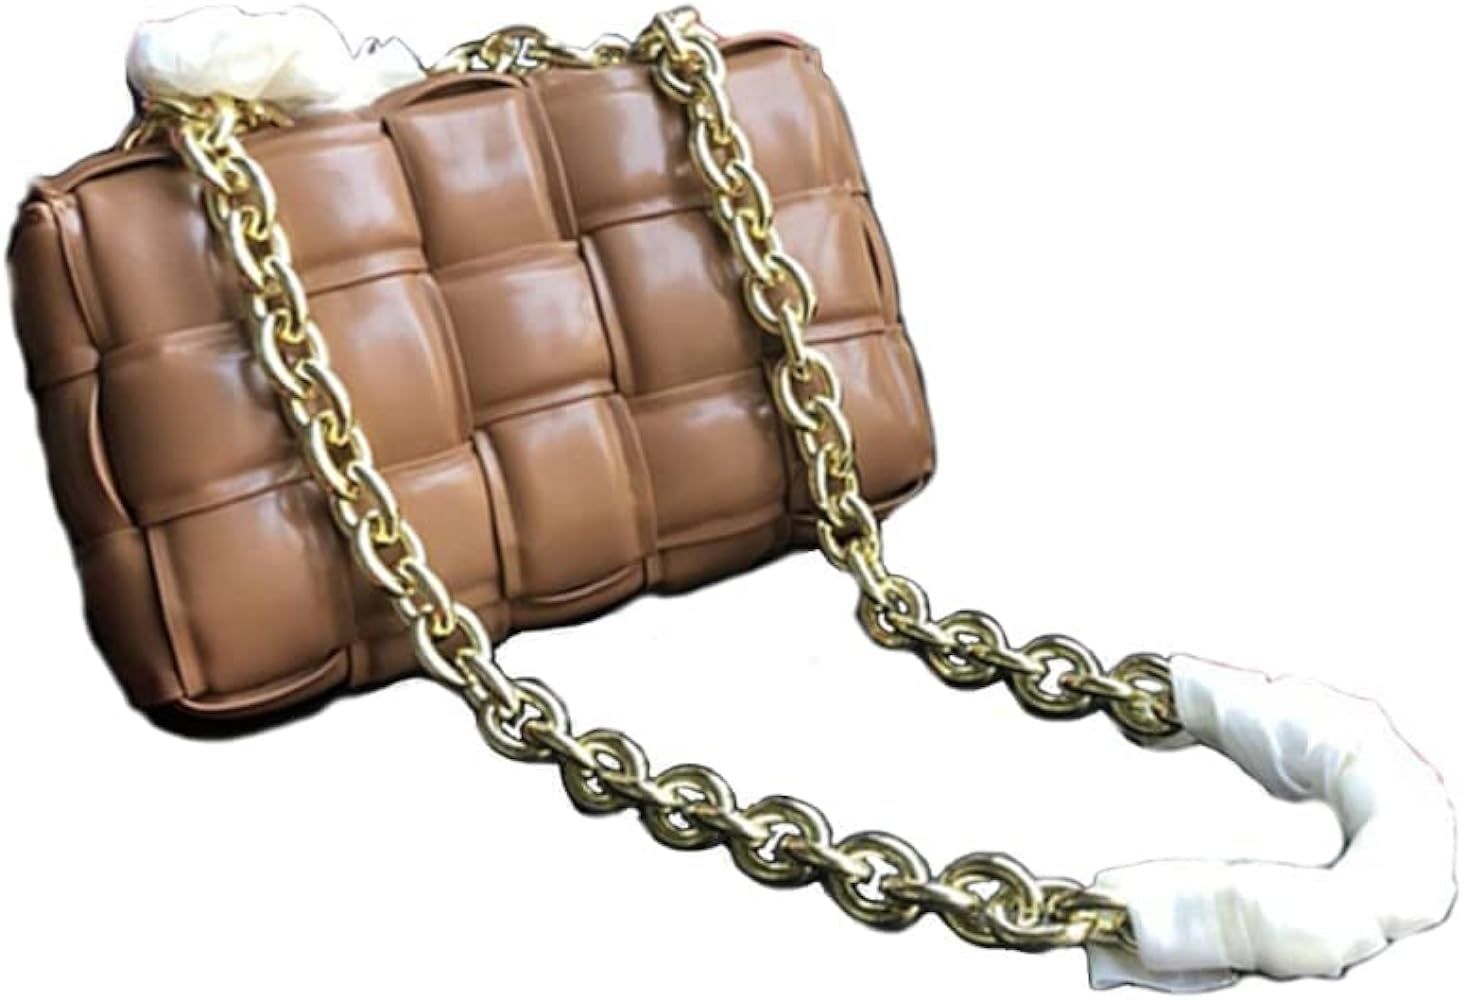 EvaLuLu Woven Chain Bag Genuine Leather Women Shoudler Bag | Amazon (US)